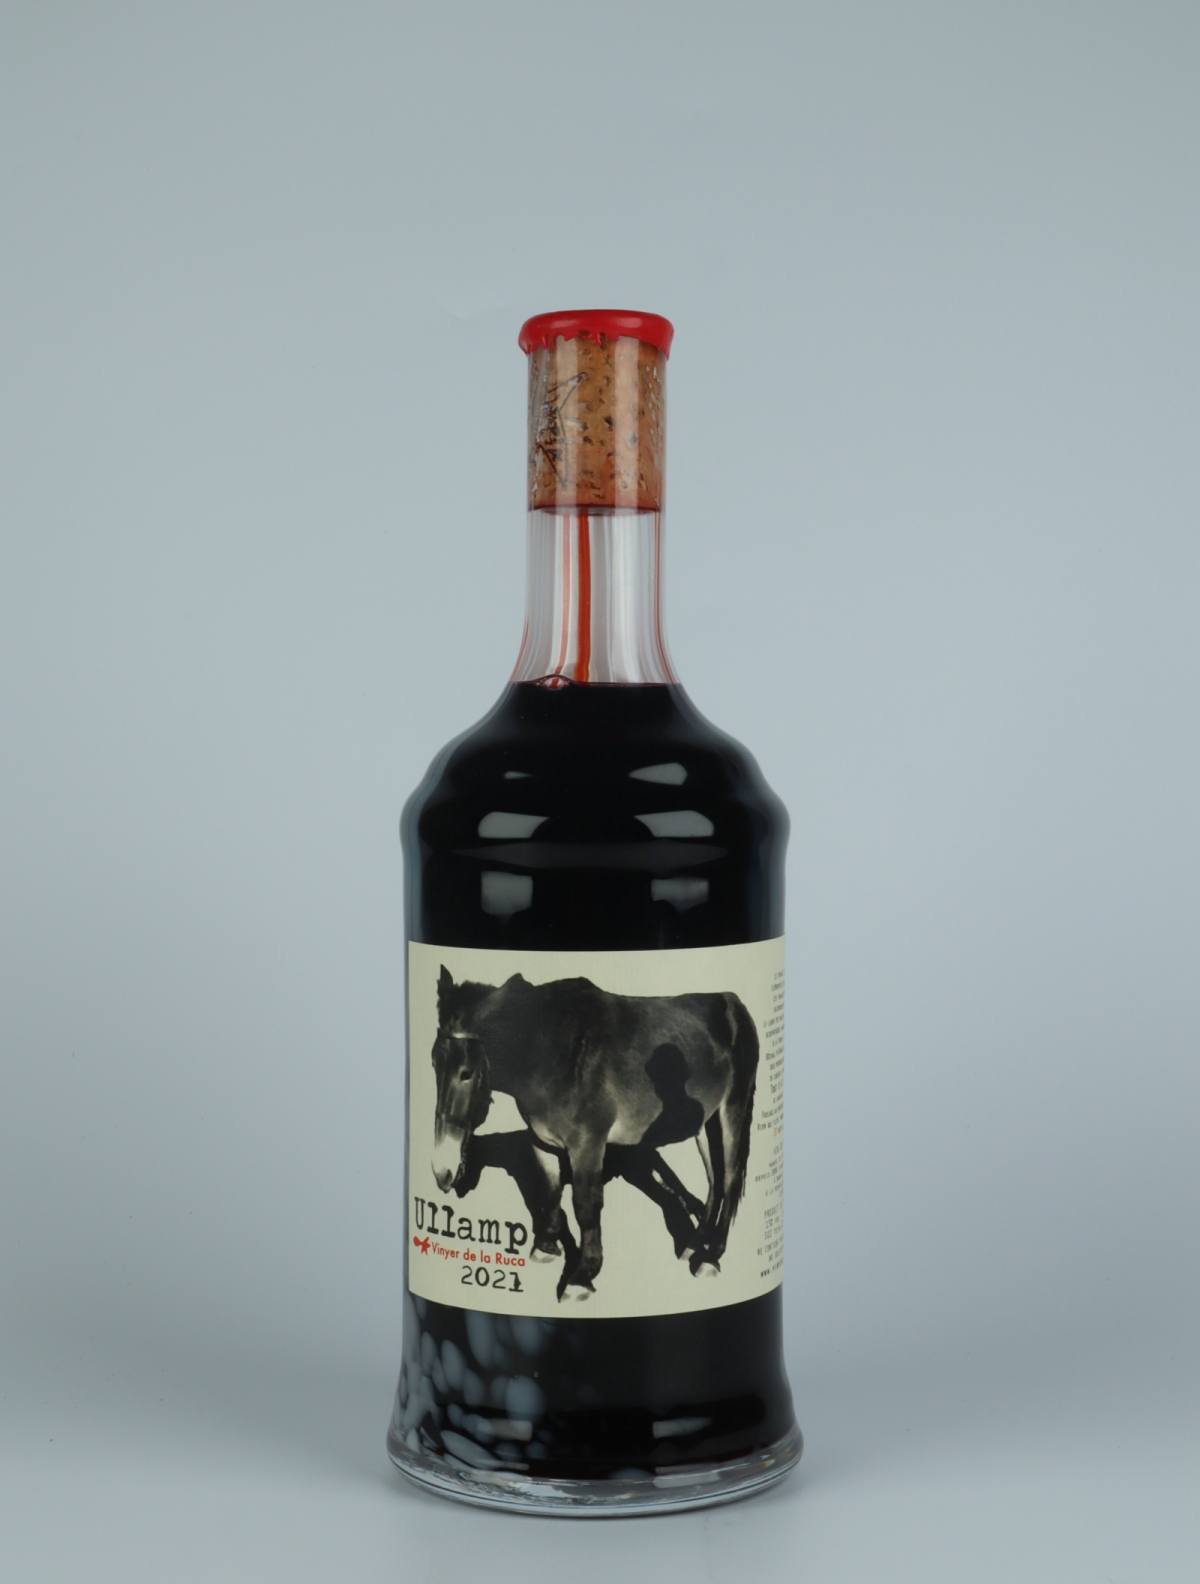 A bottle 2021 Ullamp Red wine from Vinyer de la Ruca, Rousillon in France